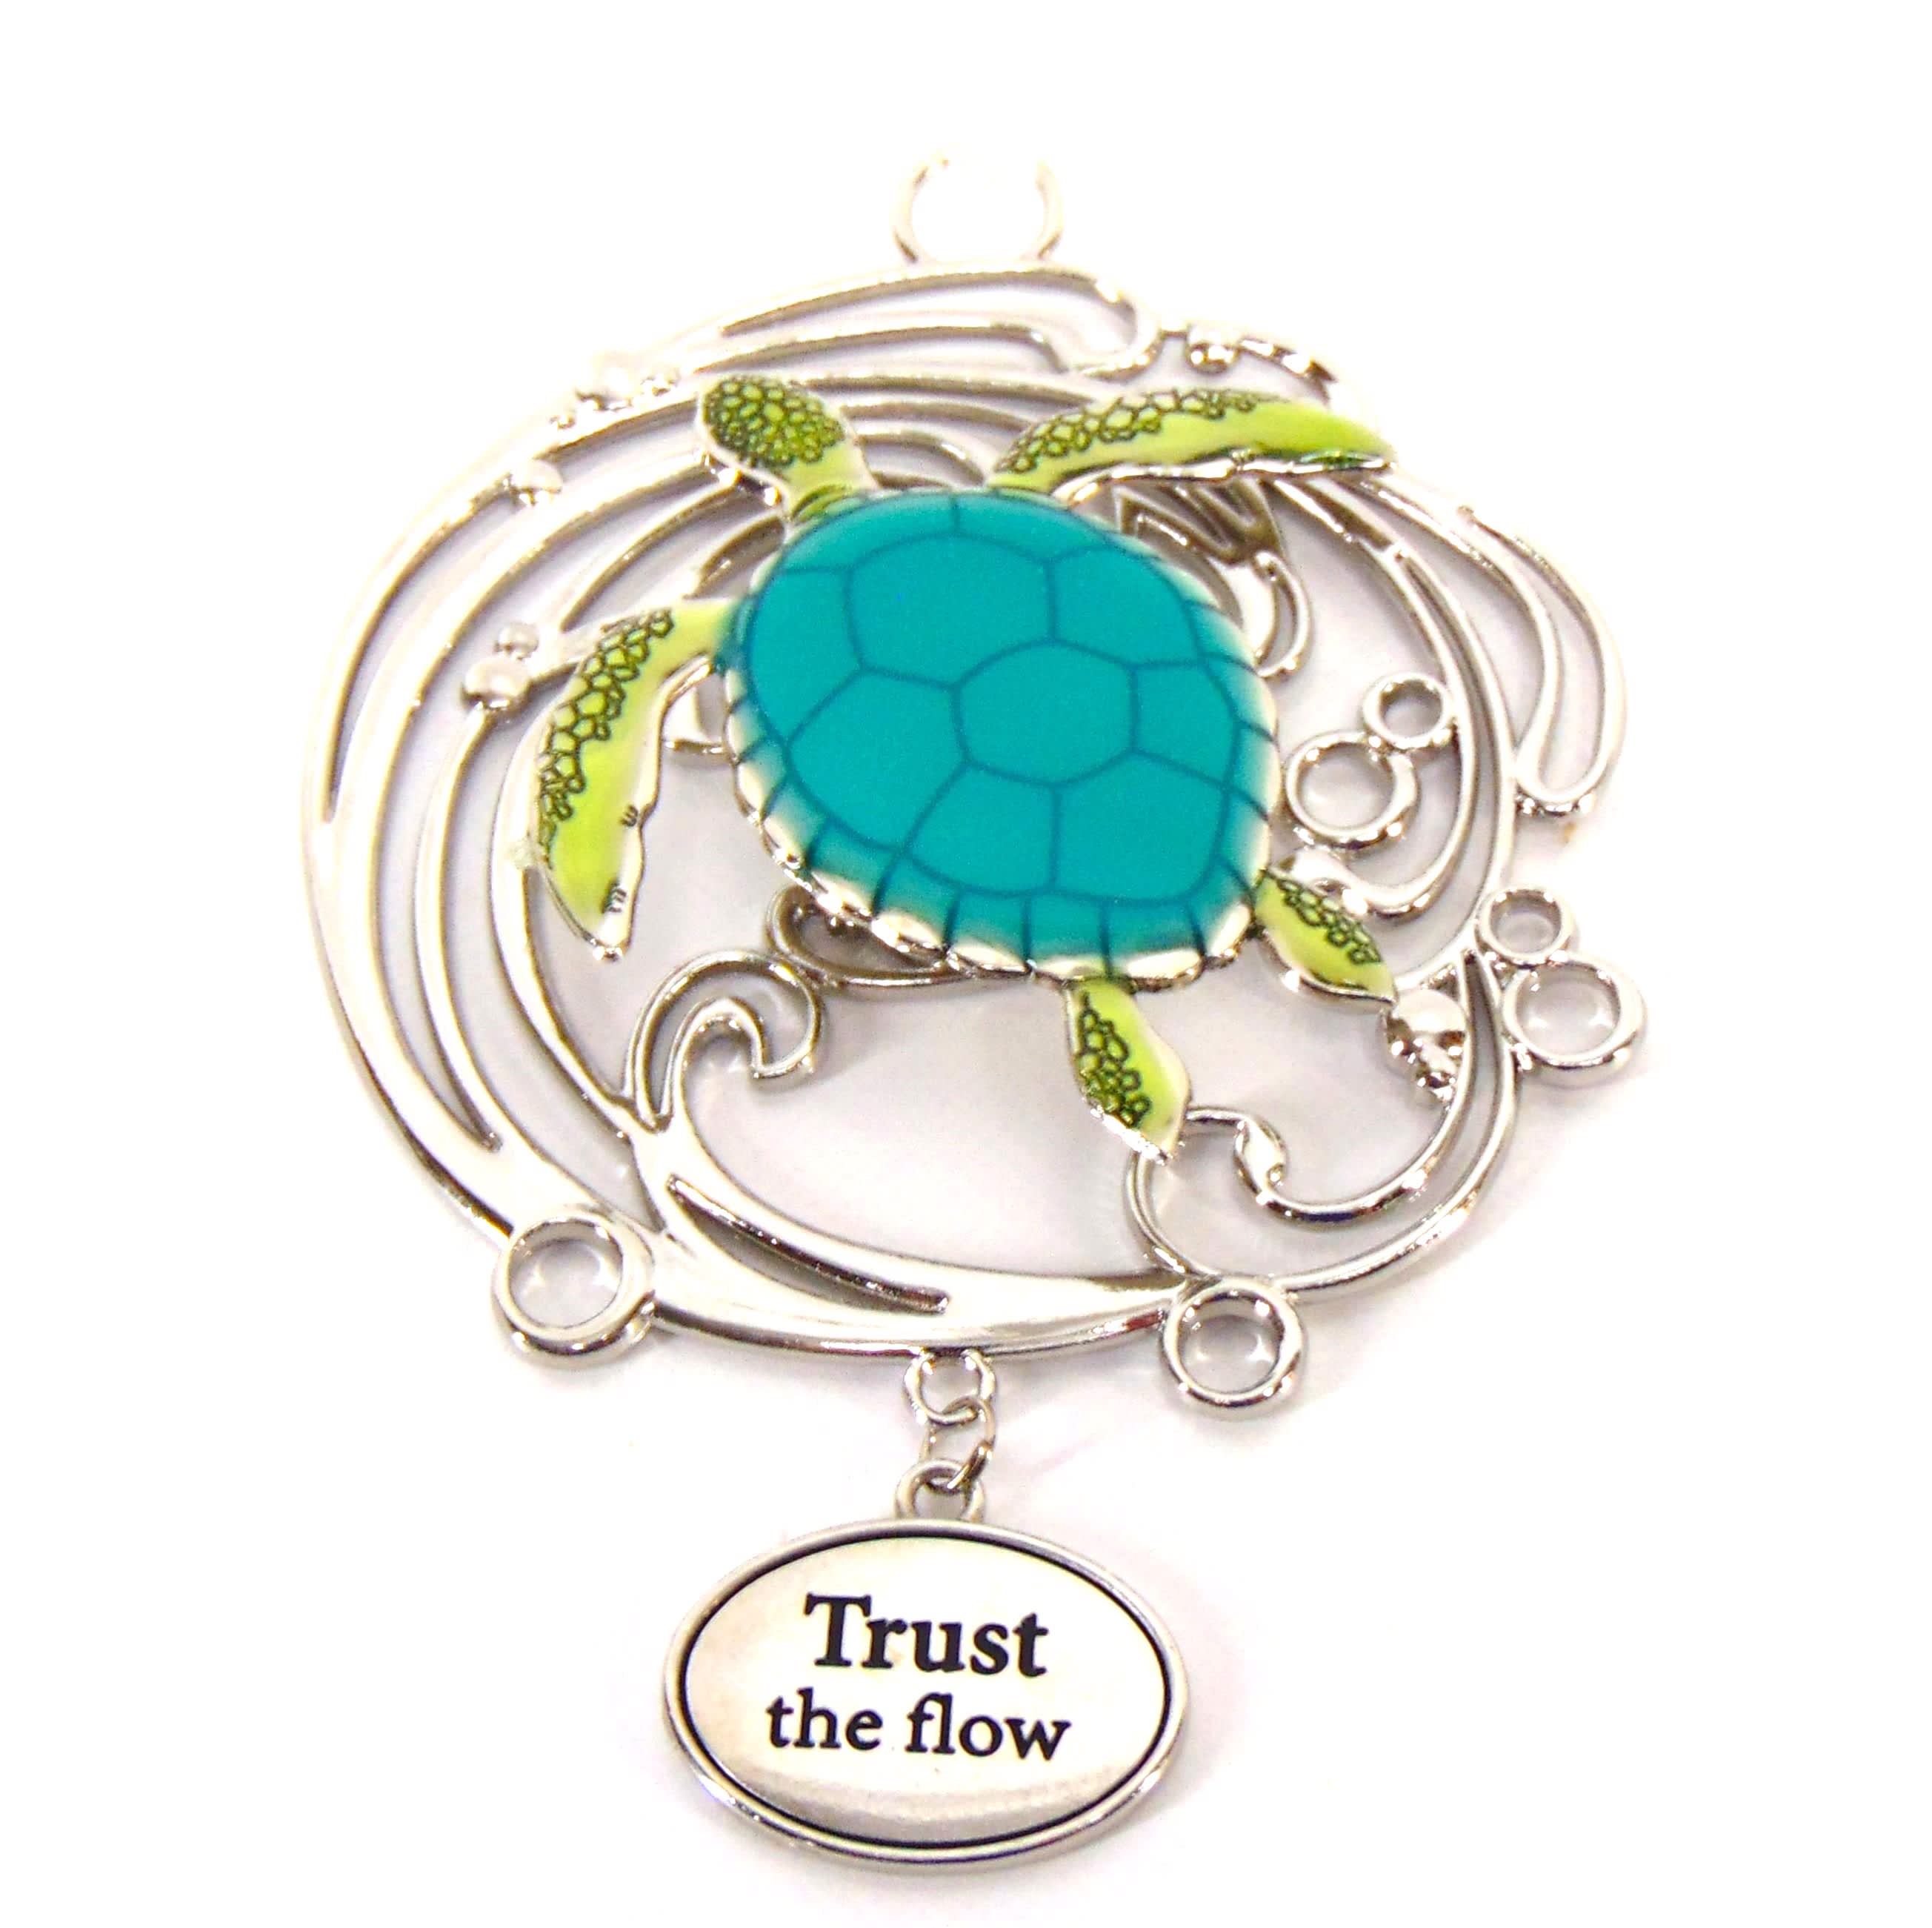 Trust the Flow Turtle Ornament - Turtle Ornament